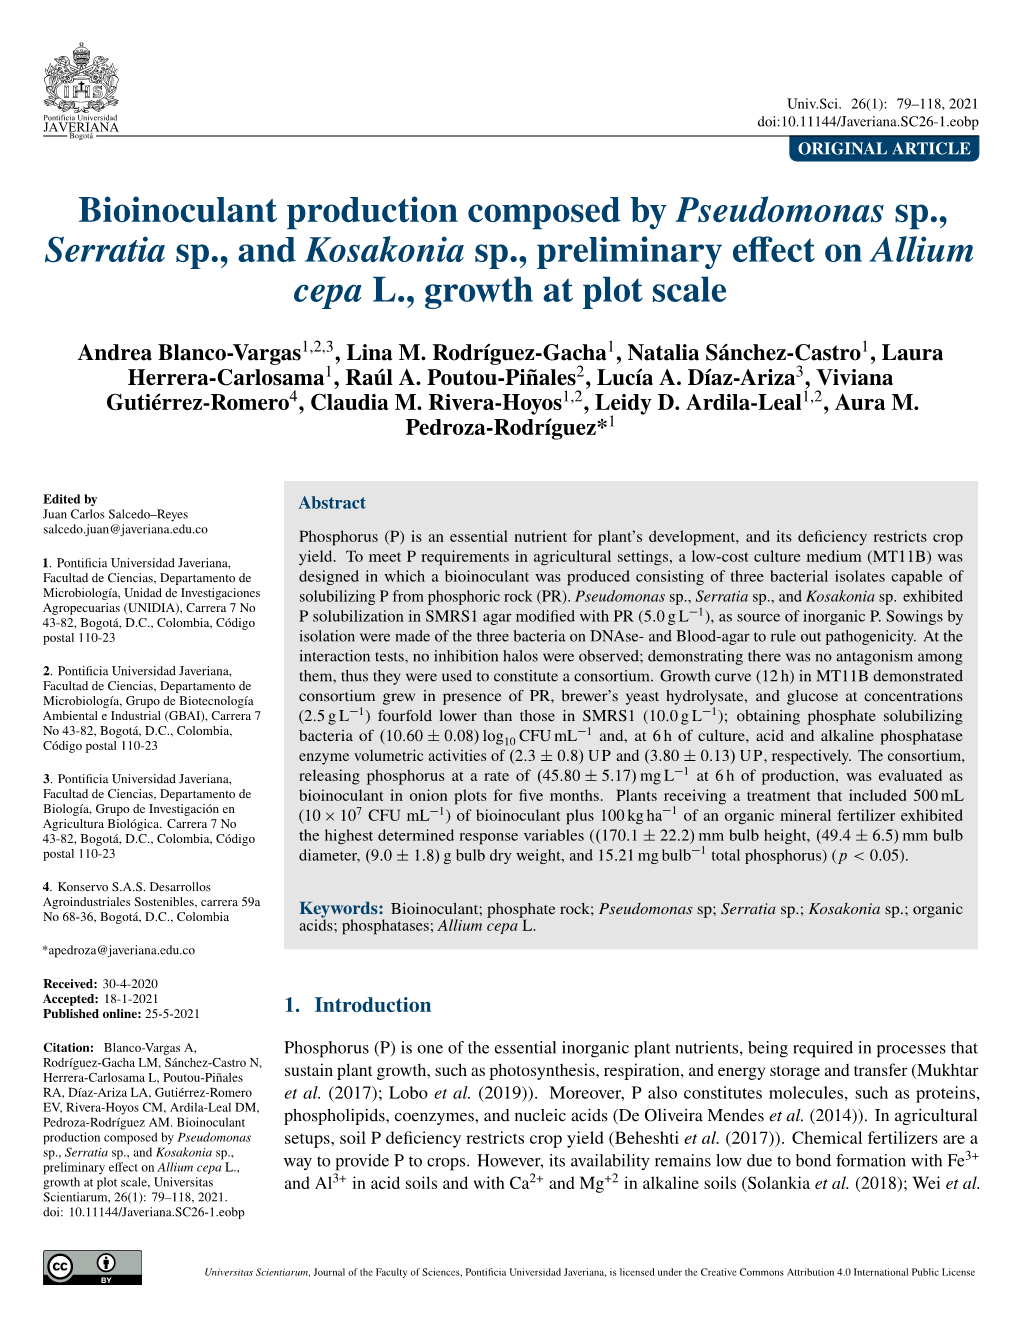 Bioinoculant Production Composed by Pseudomonas Sp., Serratia Sp., and Kosakonia Sp., Preliminary Eﬀect on Allium Cepa L., Growth at Plot Scale